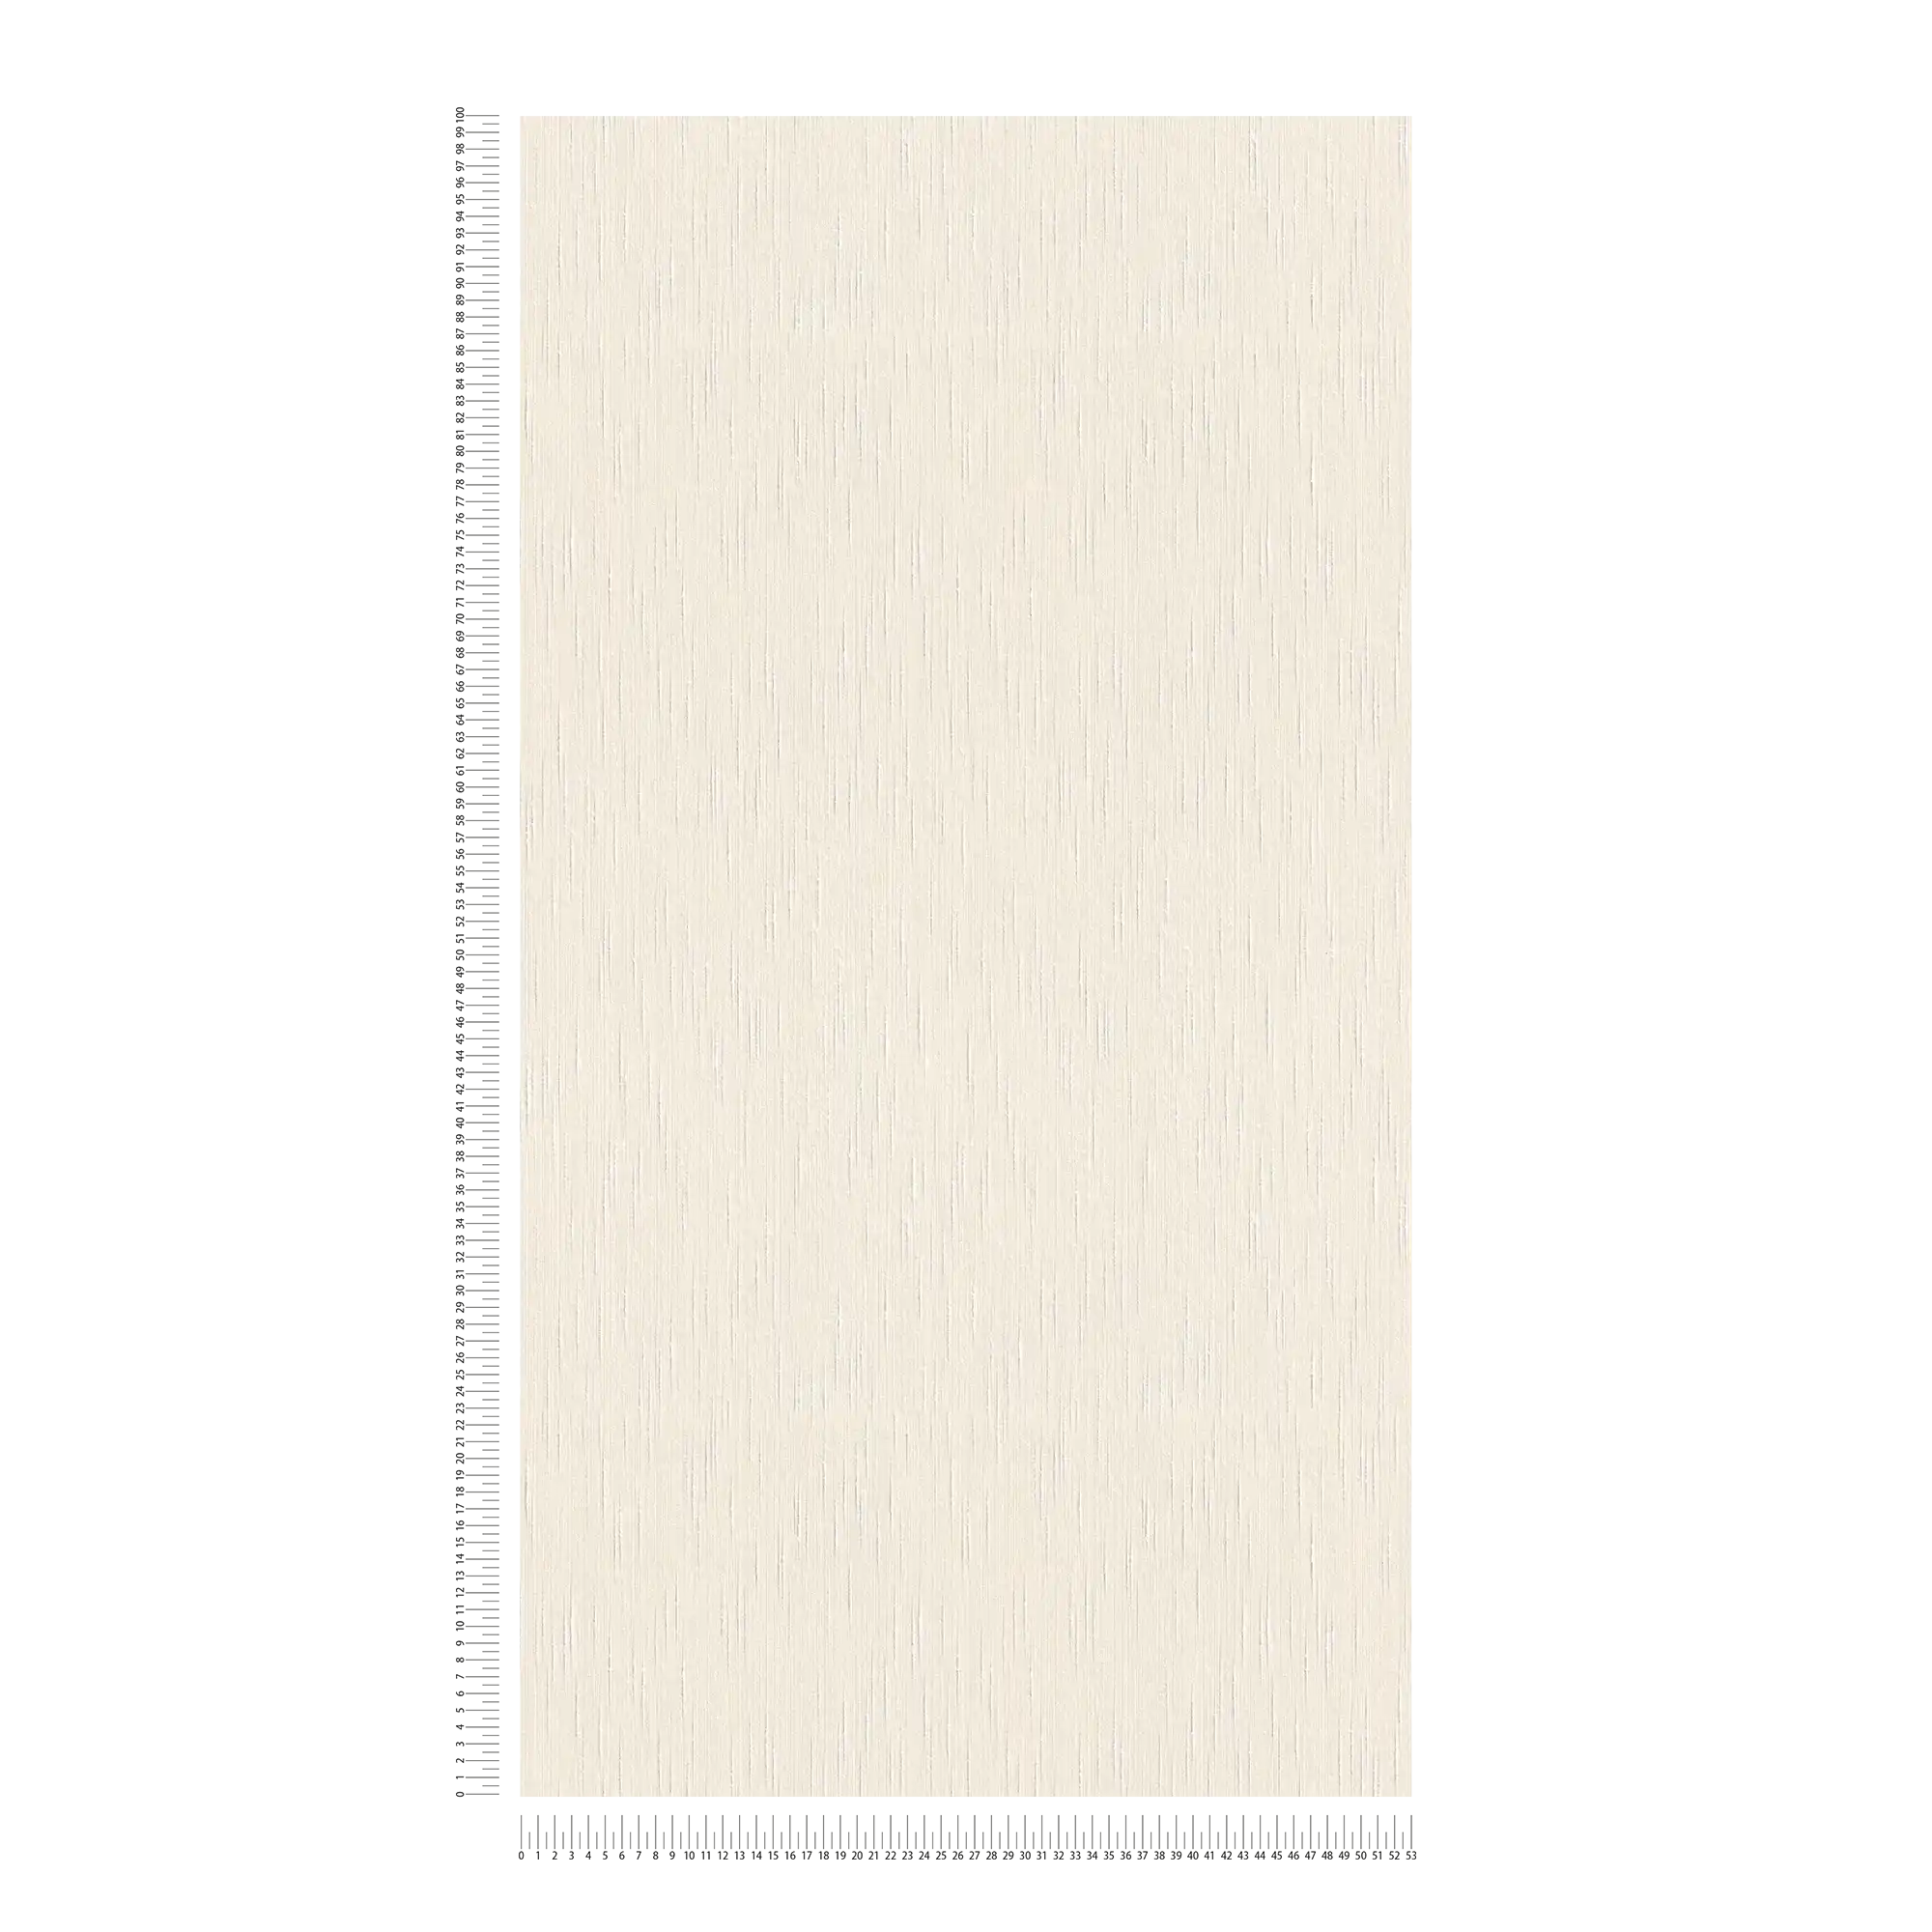             Carta da parati in tessuto non tessuto tinta unita crema con trama tessile in stile Dupion
        